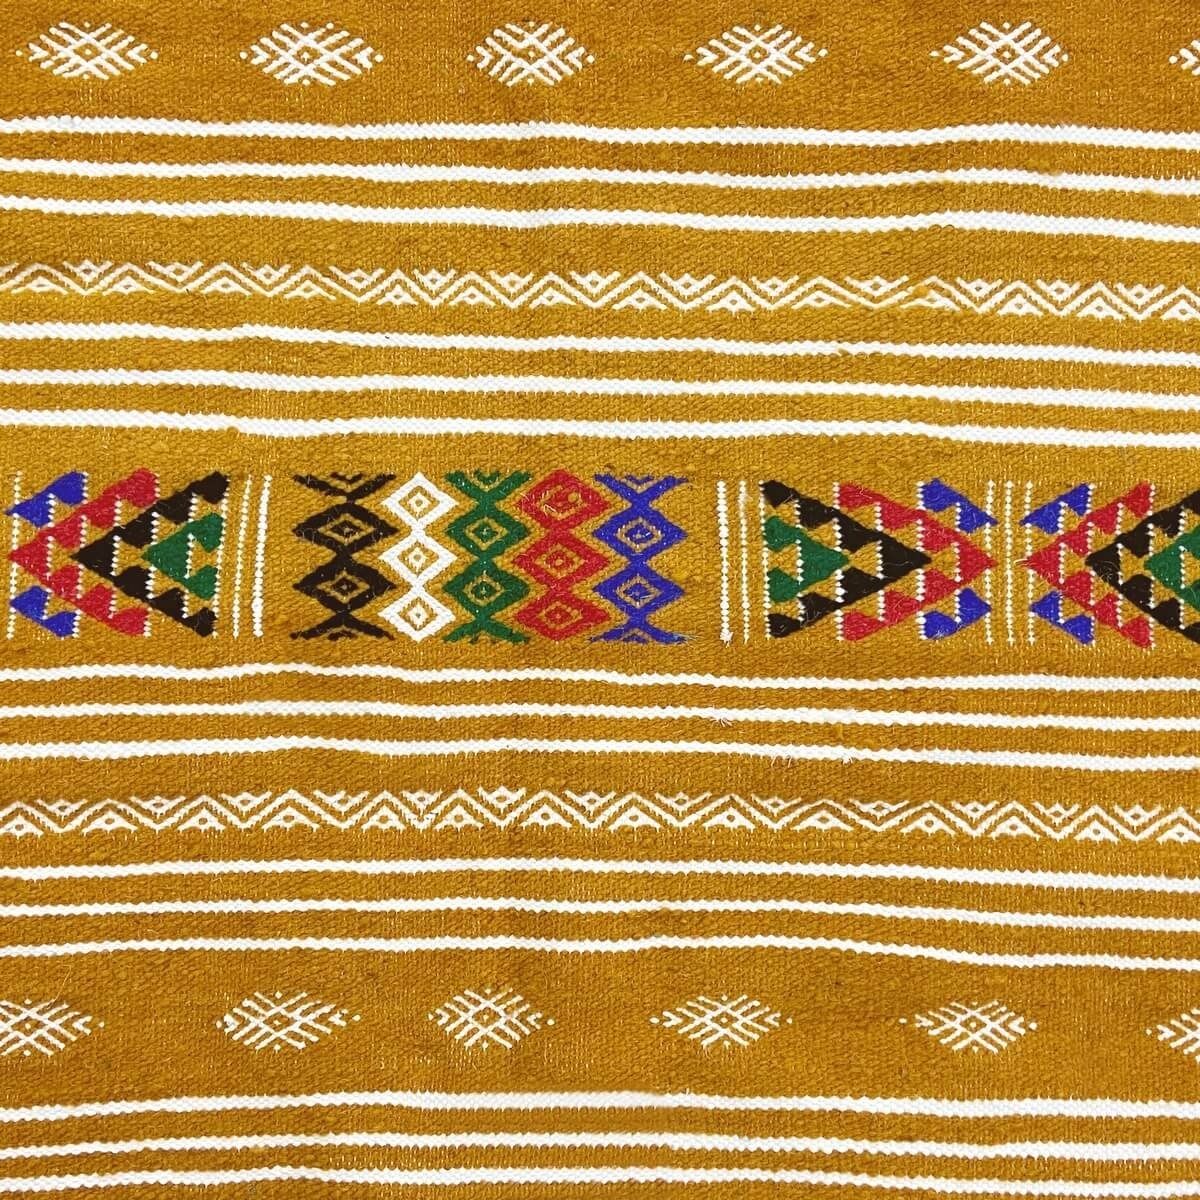 Berber tapijt Tapijt Kilim Kenza 118 x198 Geel (Handgeweven, Wol, Tunesië) Tunesisch kilimdeken, Marokkaanse stijl. Rechthoekig 